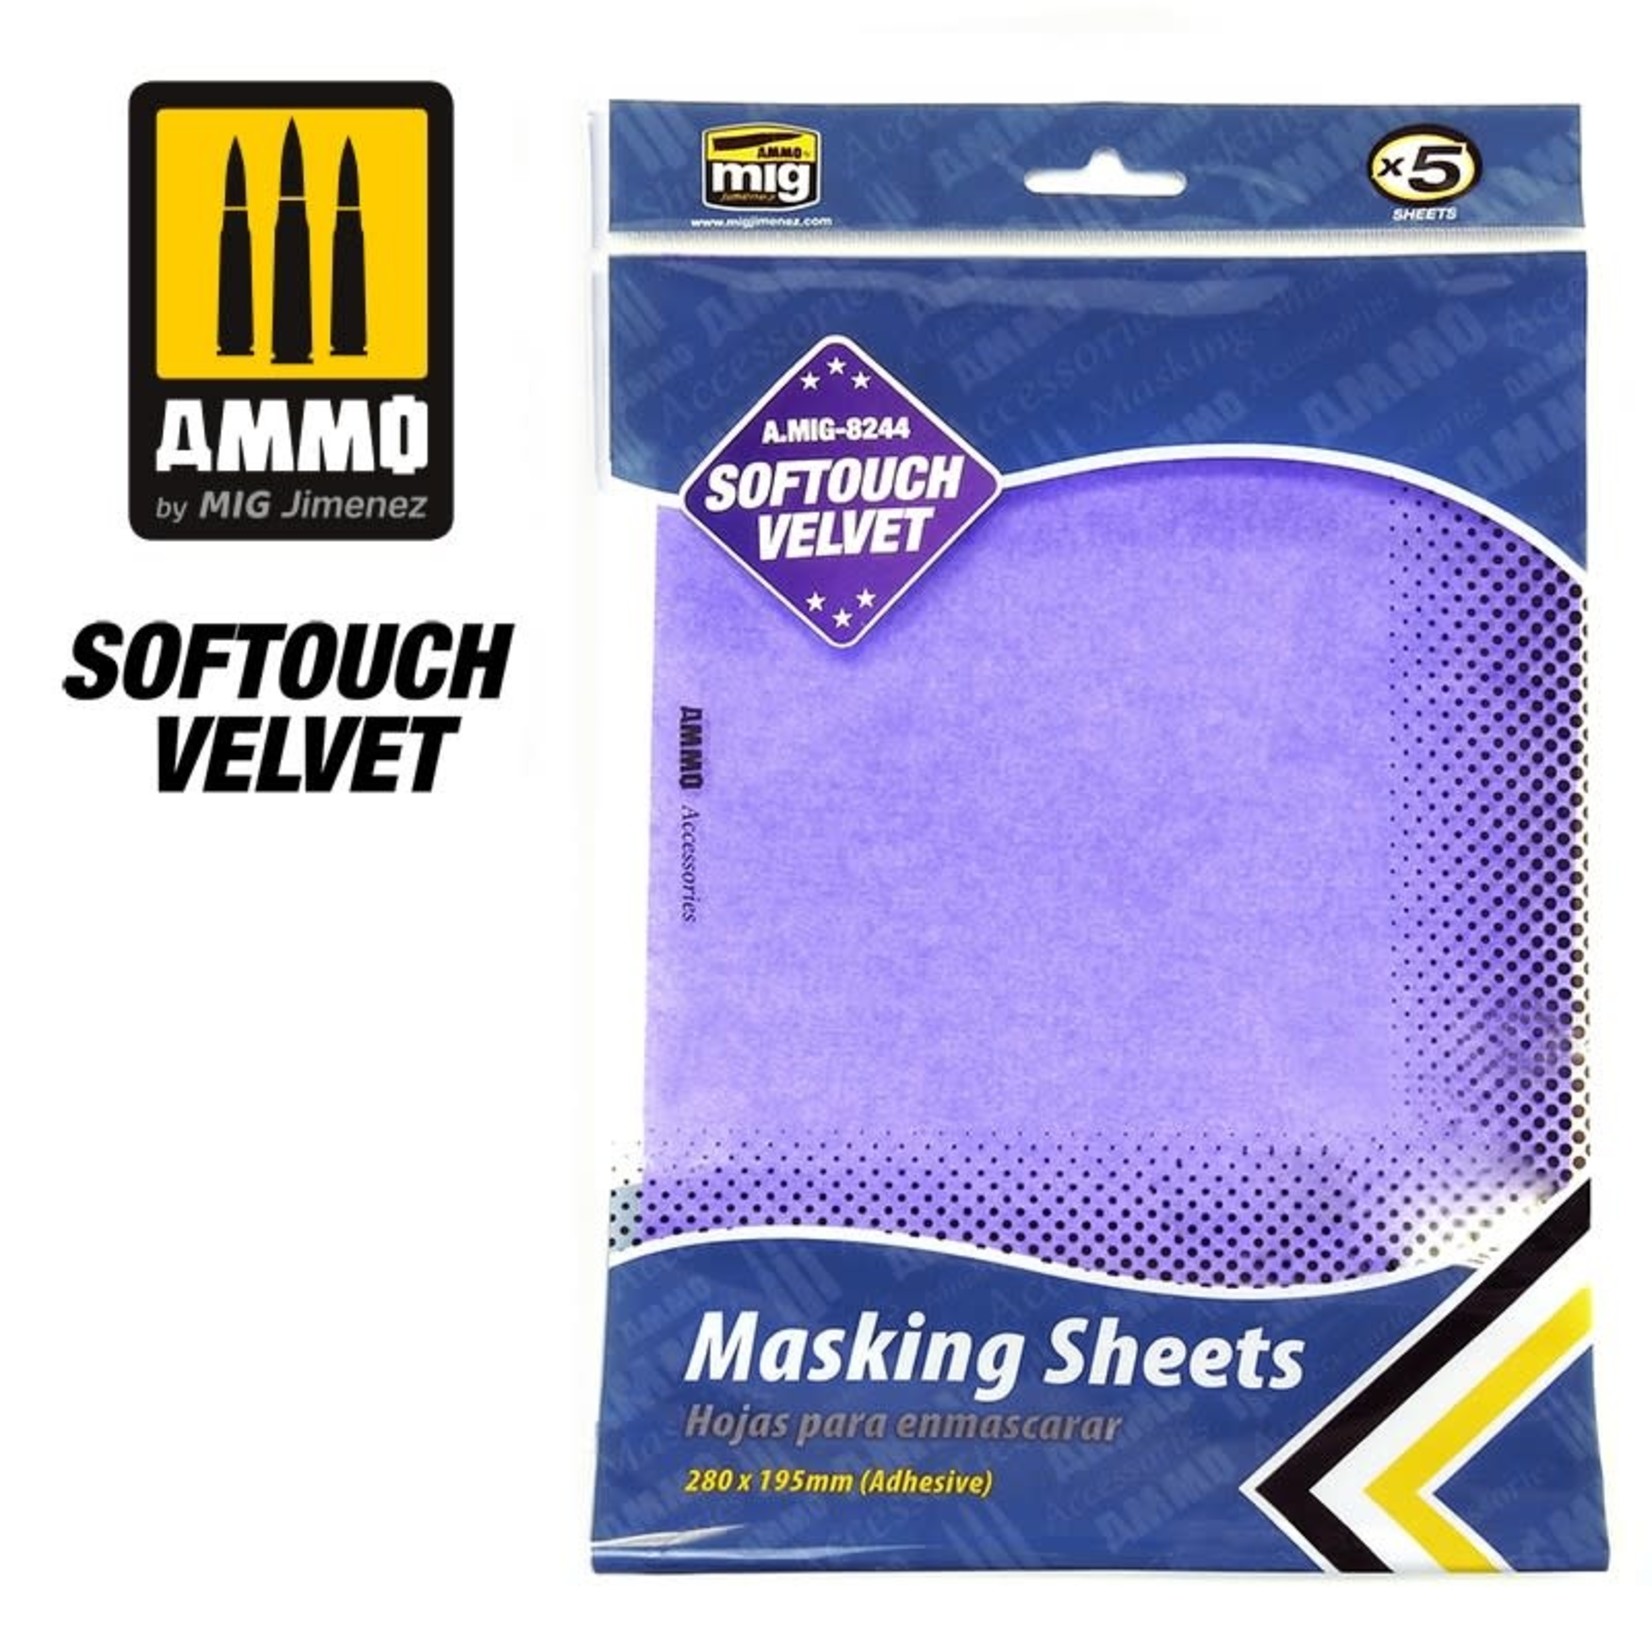 Ammo by Mig Jimenez A.MIG-8244 Softouch Velvet Adhesive Masking Sheets, 280mm x 195mm (5) set